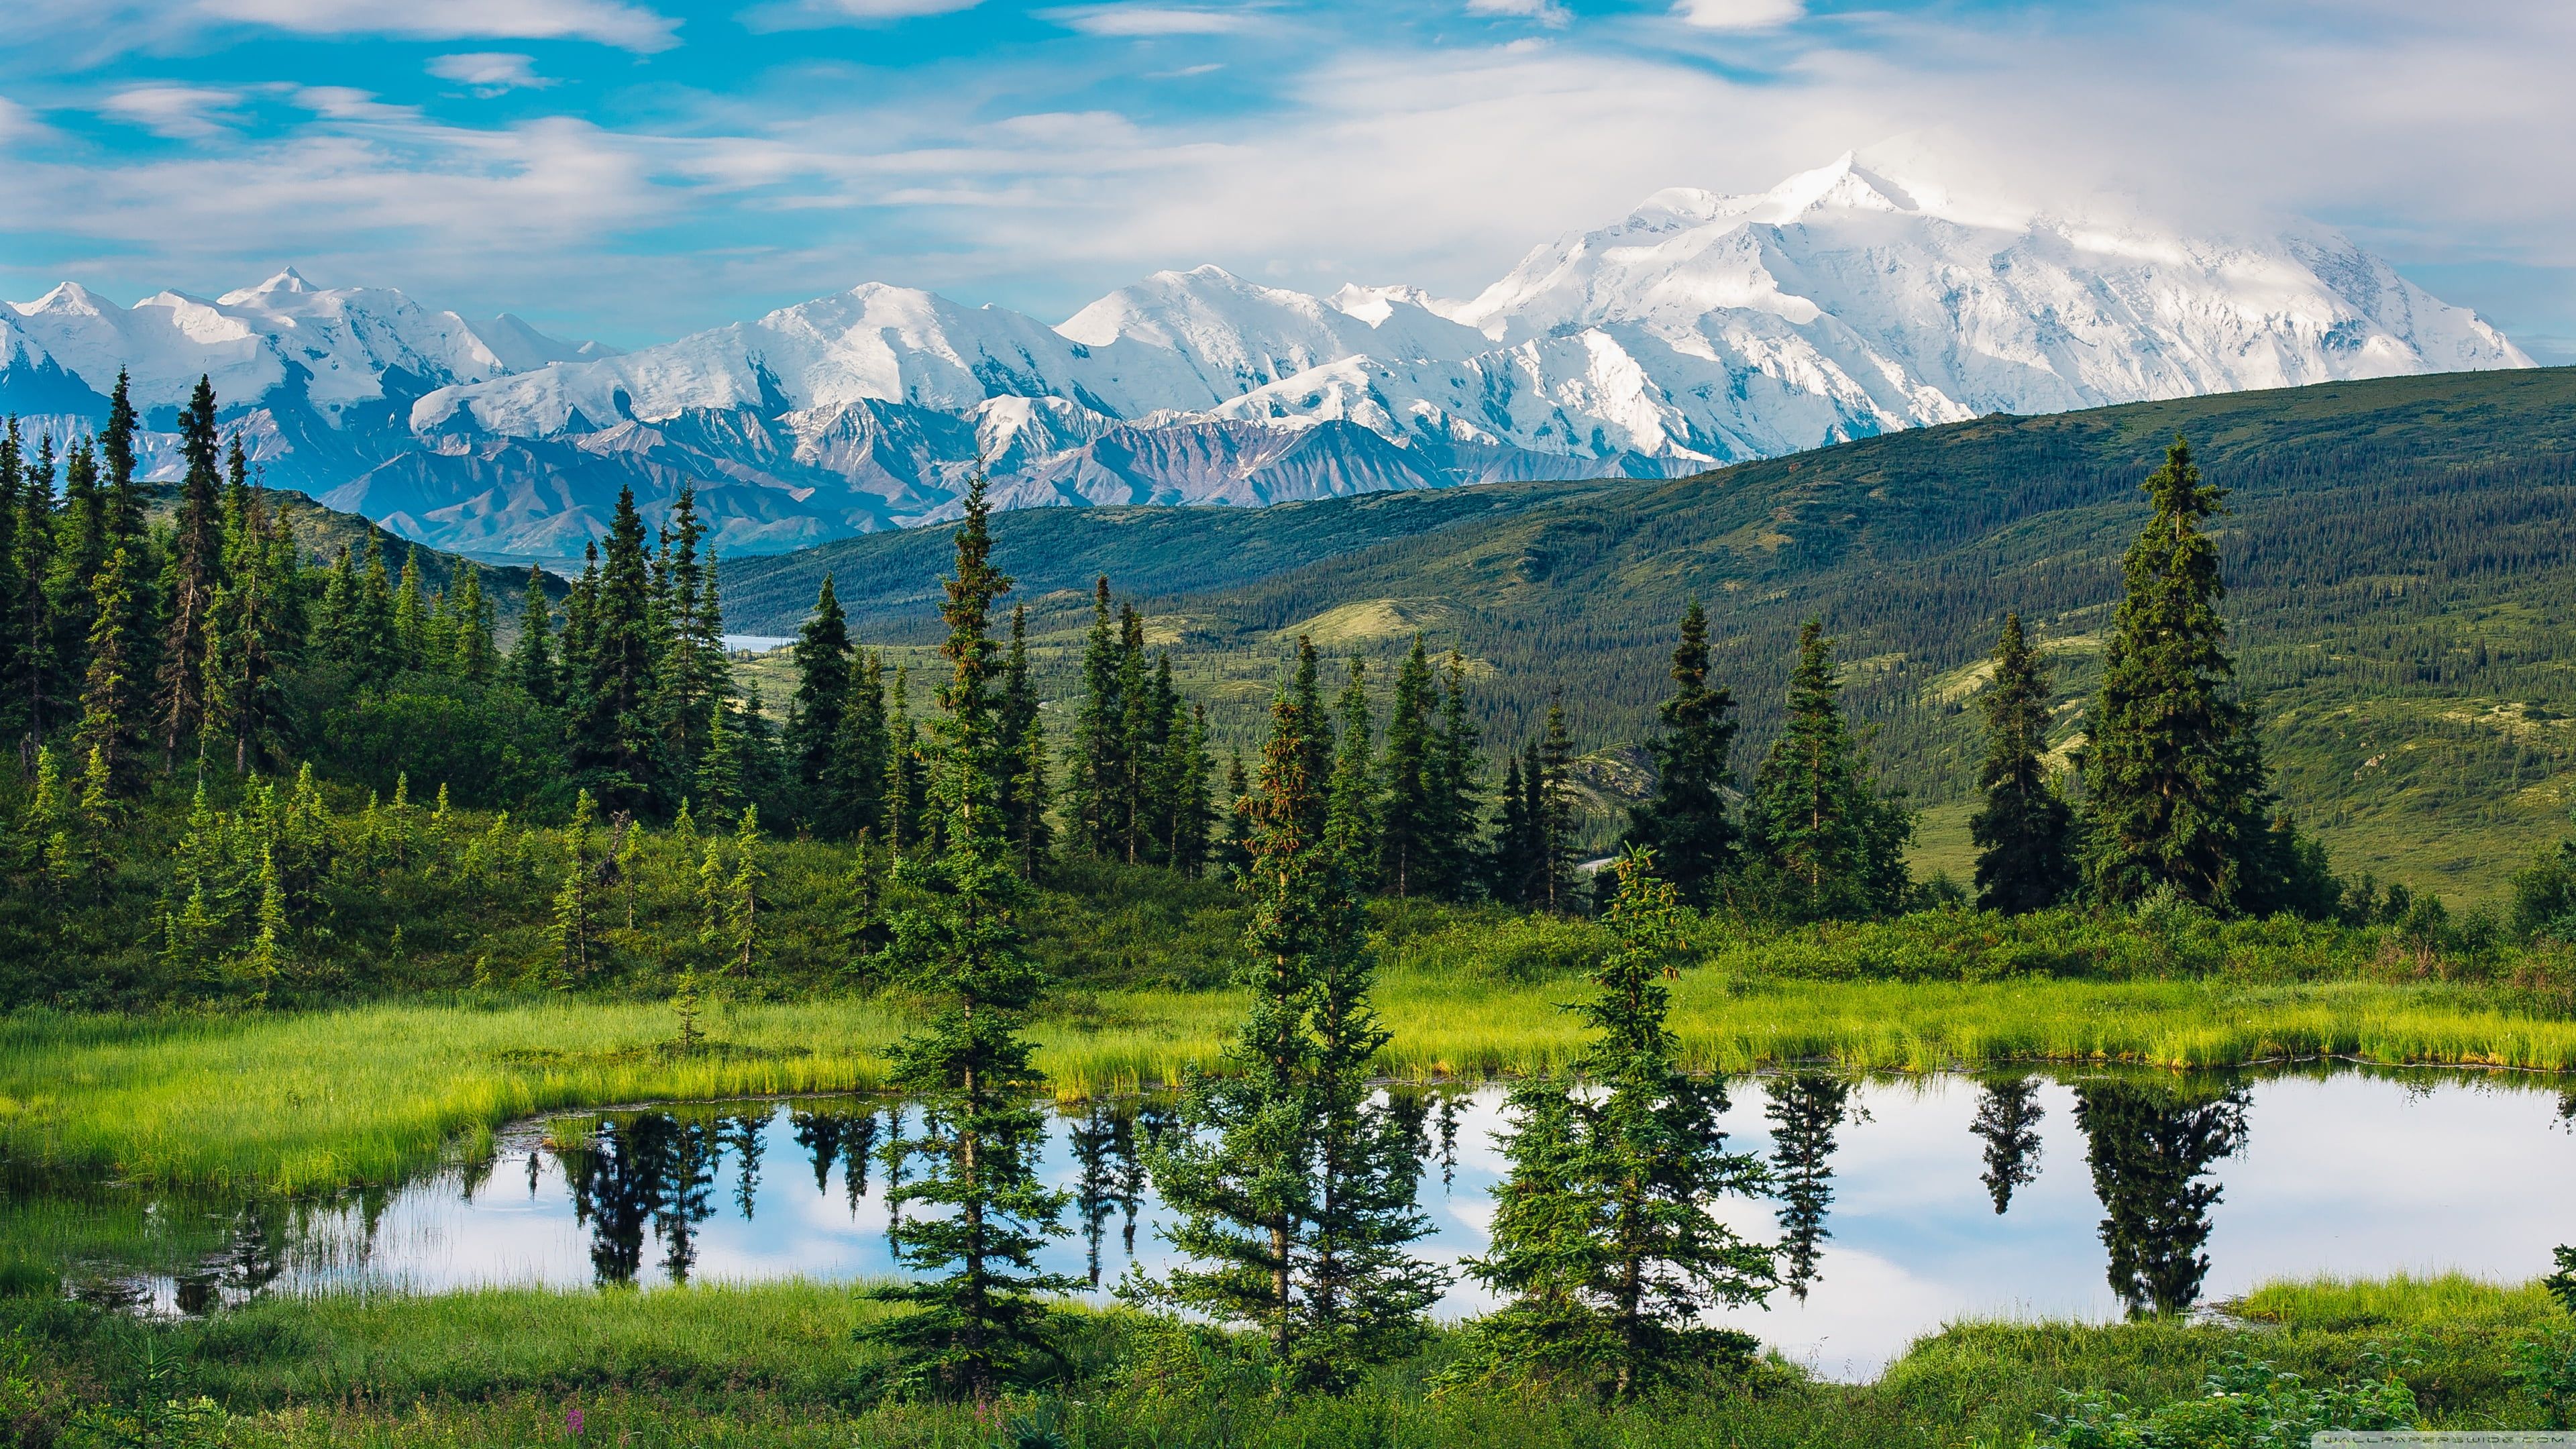 green pine trees #Alaska #nature #landscape #mountains #water